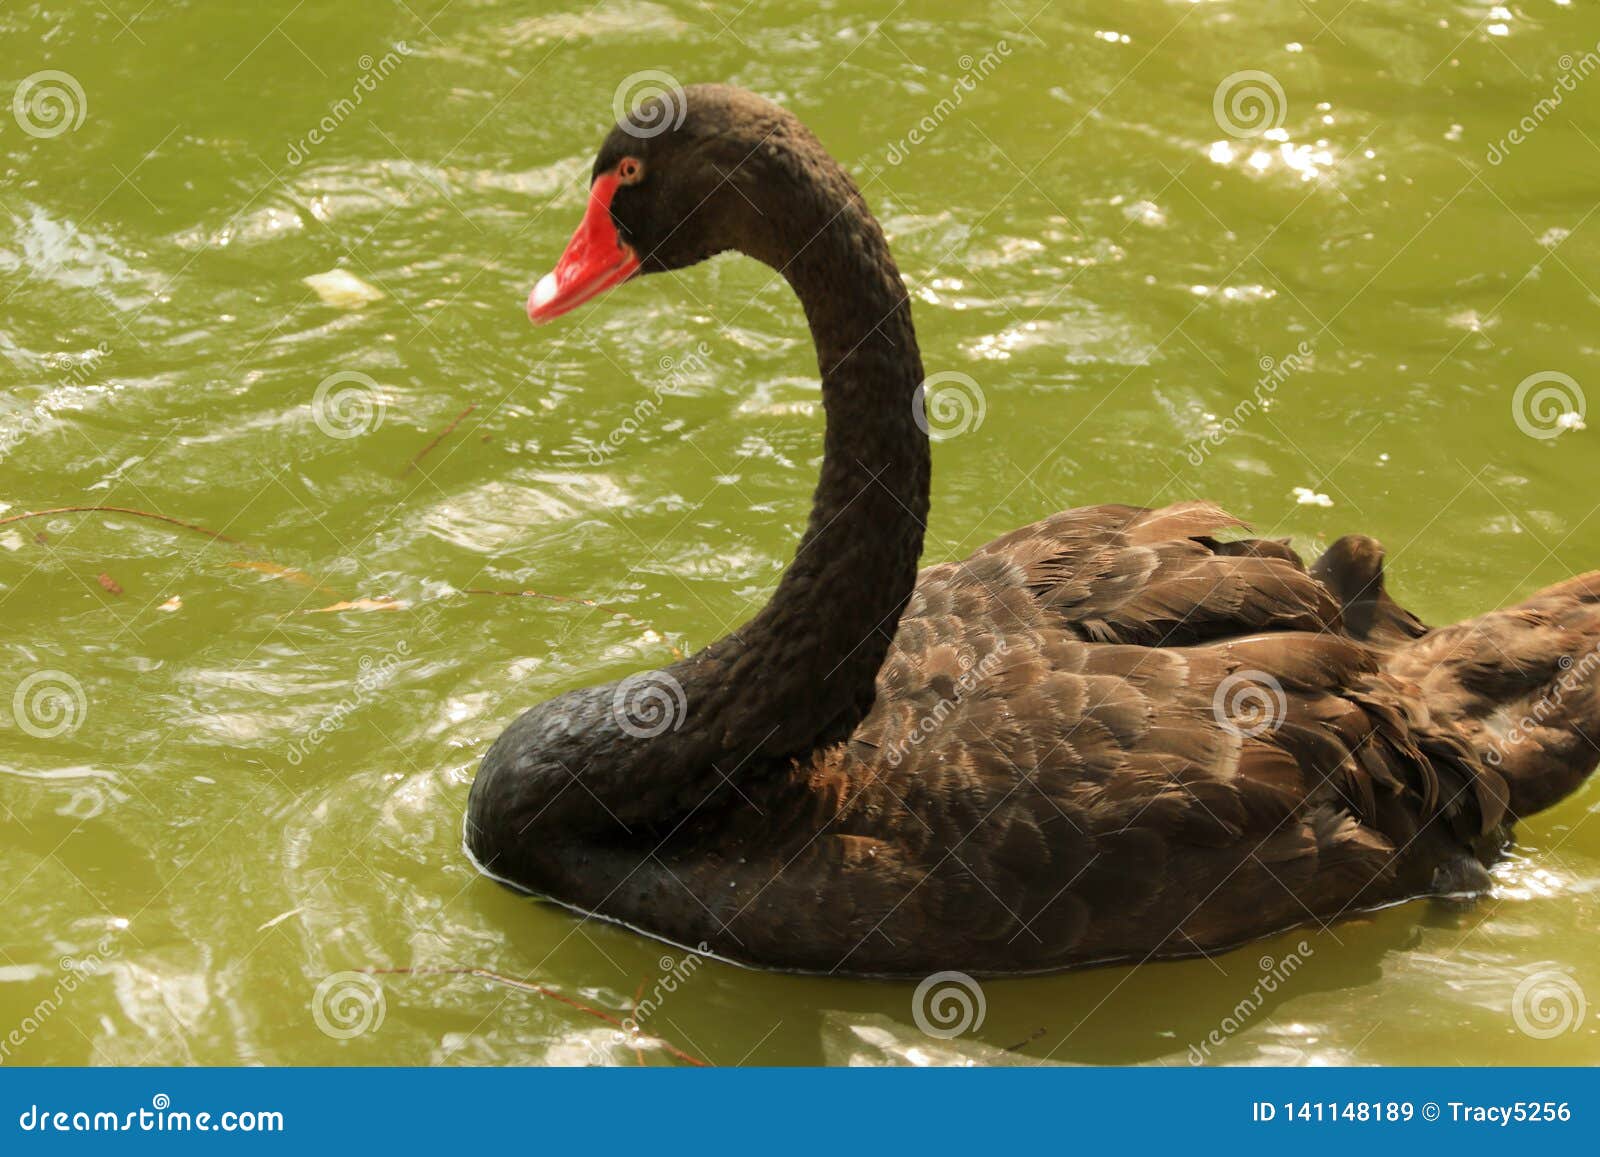 analog vejkryds agitation Black Swan in Beijing Wildlife Park Stock Image - Image of wildlife,  beijing: 141148189